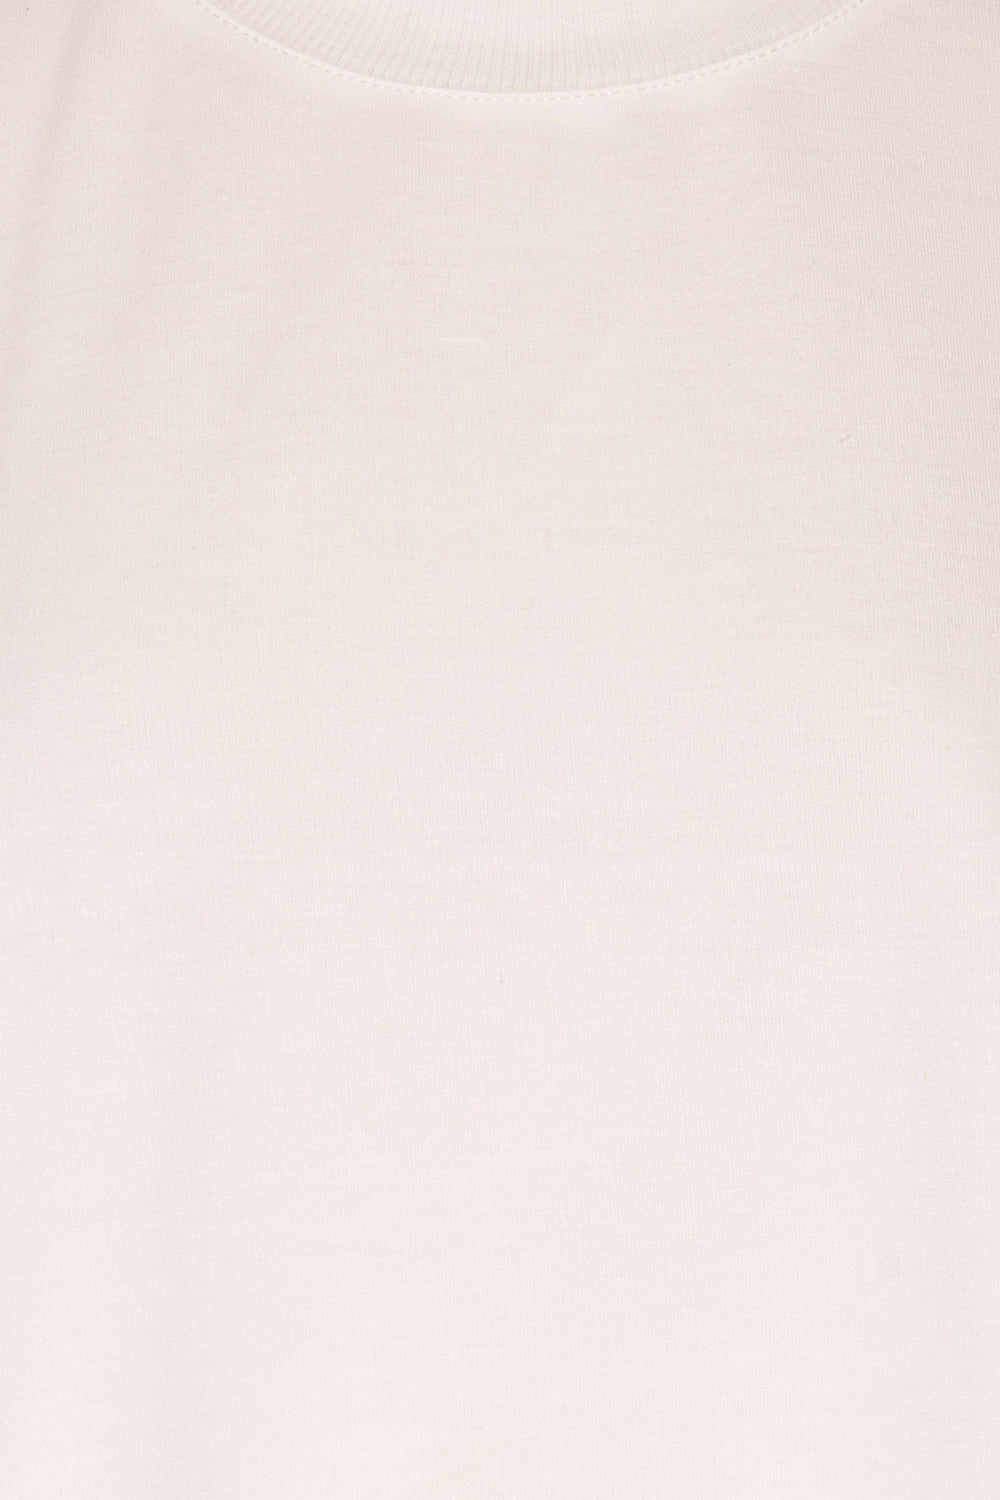 Pasklek White Long Sleeve Crop Top | La petite garçonne fabric